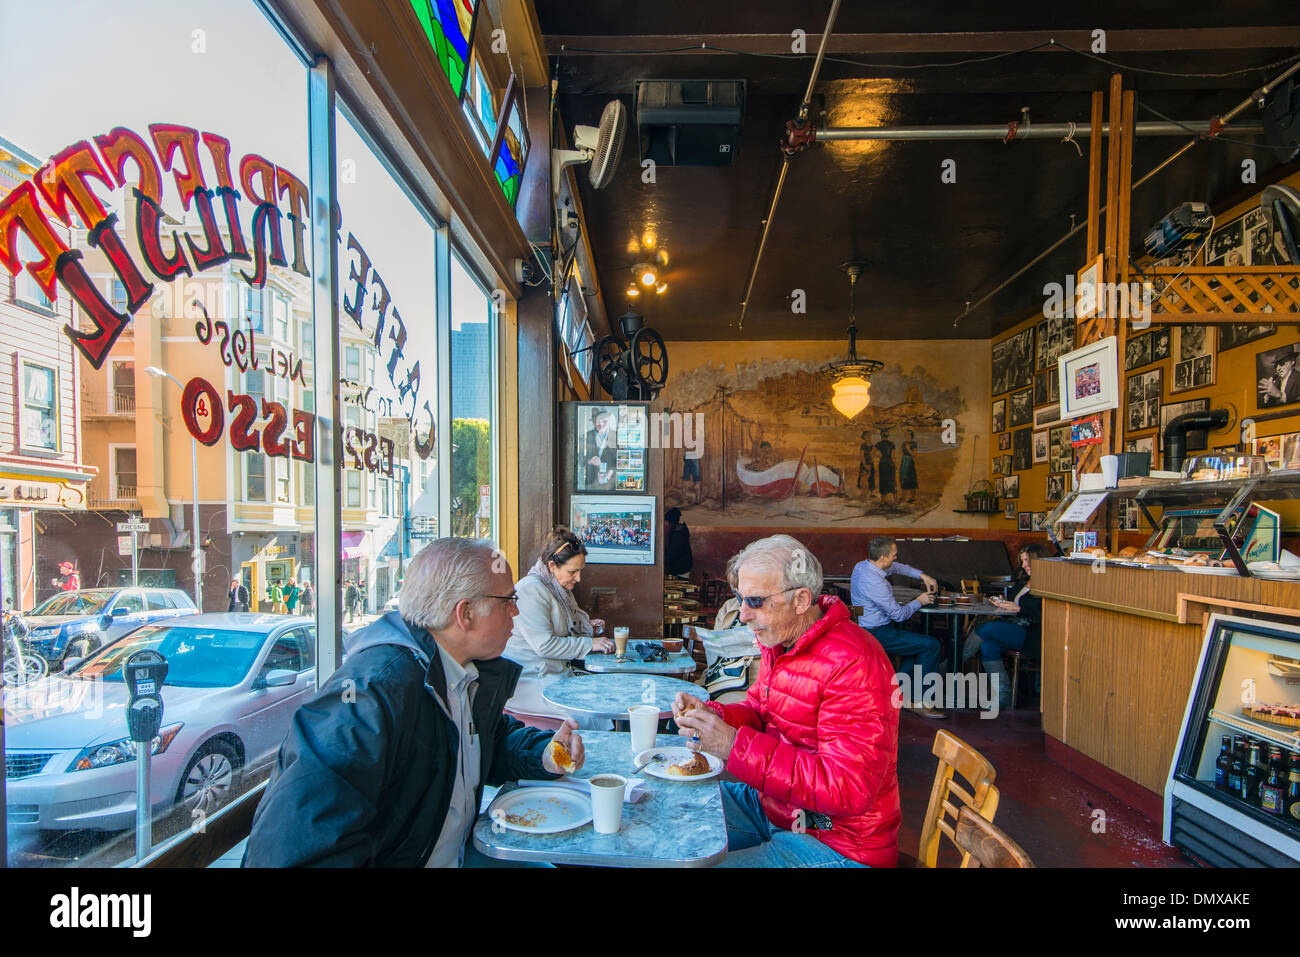 The historical Caffé Trieste located in North Beach neighborhood, San Francisco, California, USA Stock Photo